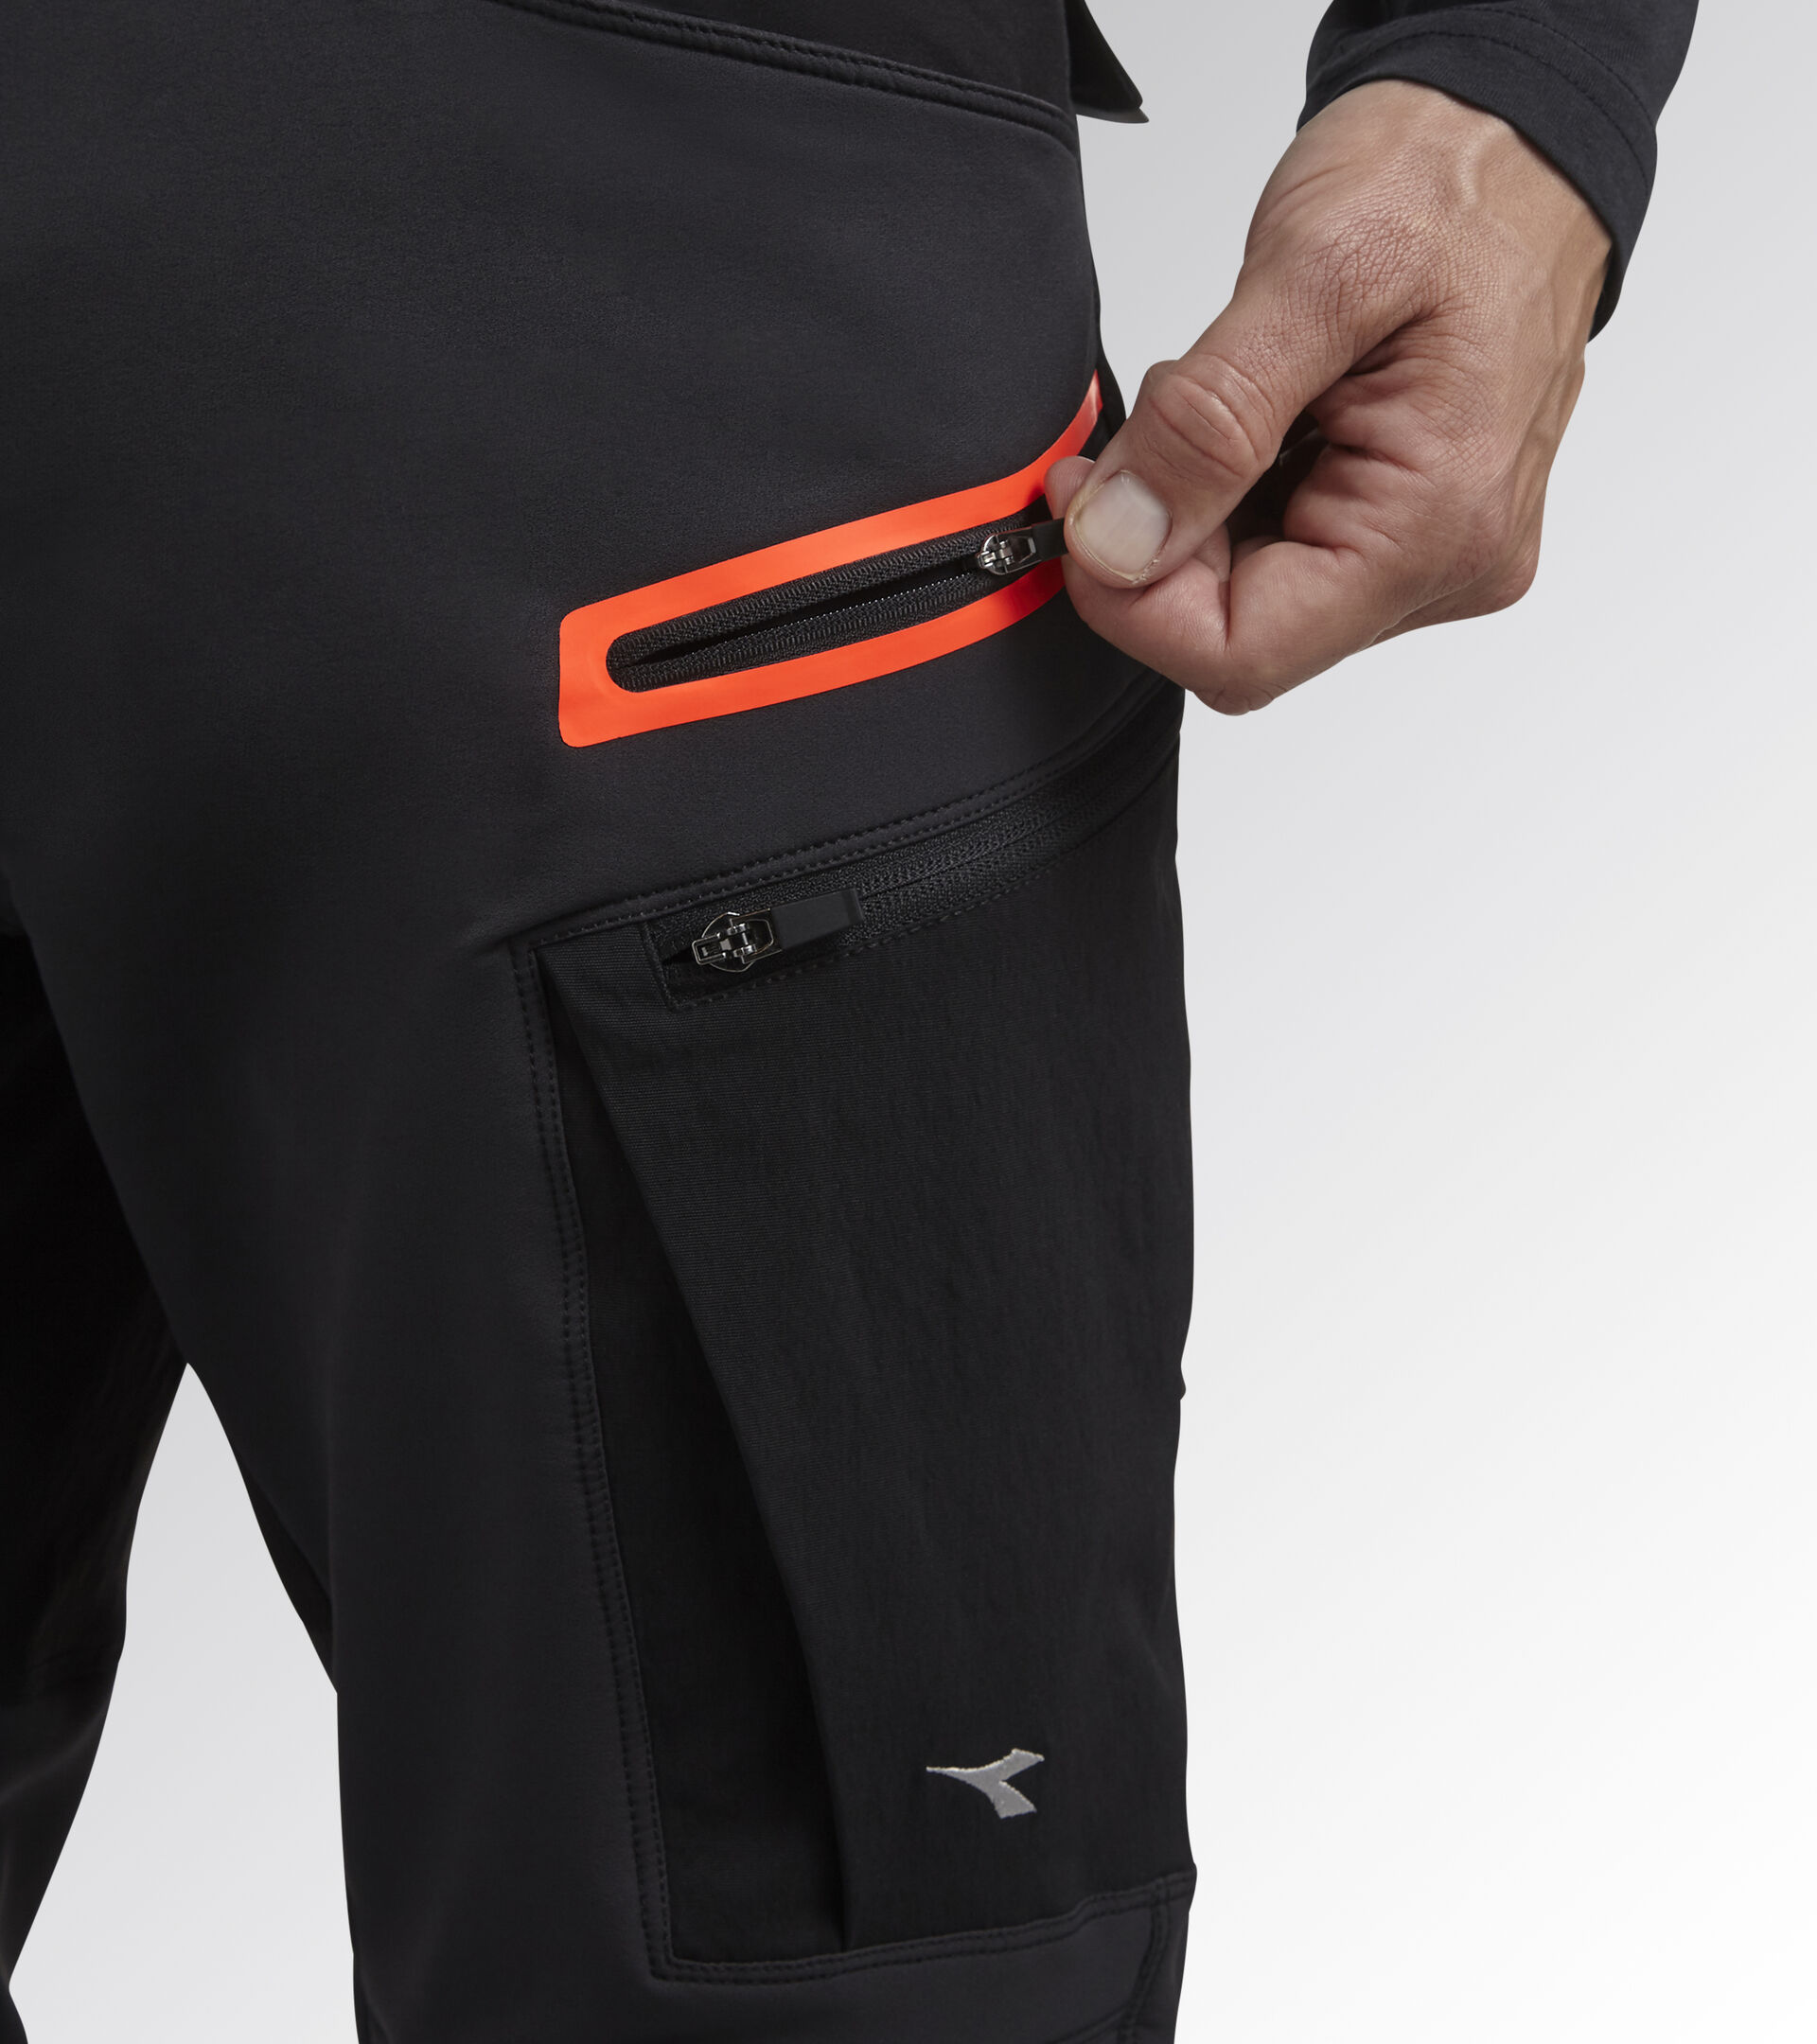 Work trousers PANT HYBRID PERFORMANCE BLACK/PHANTOM - Utility